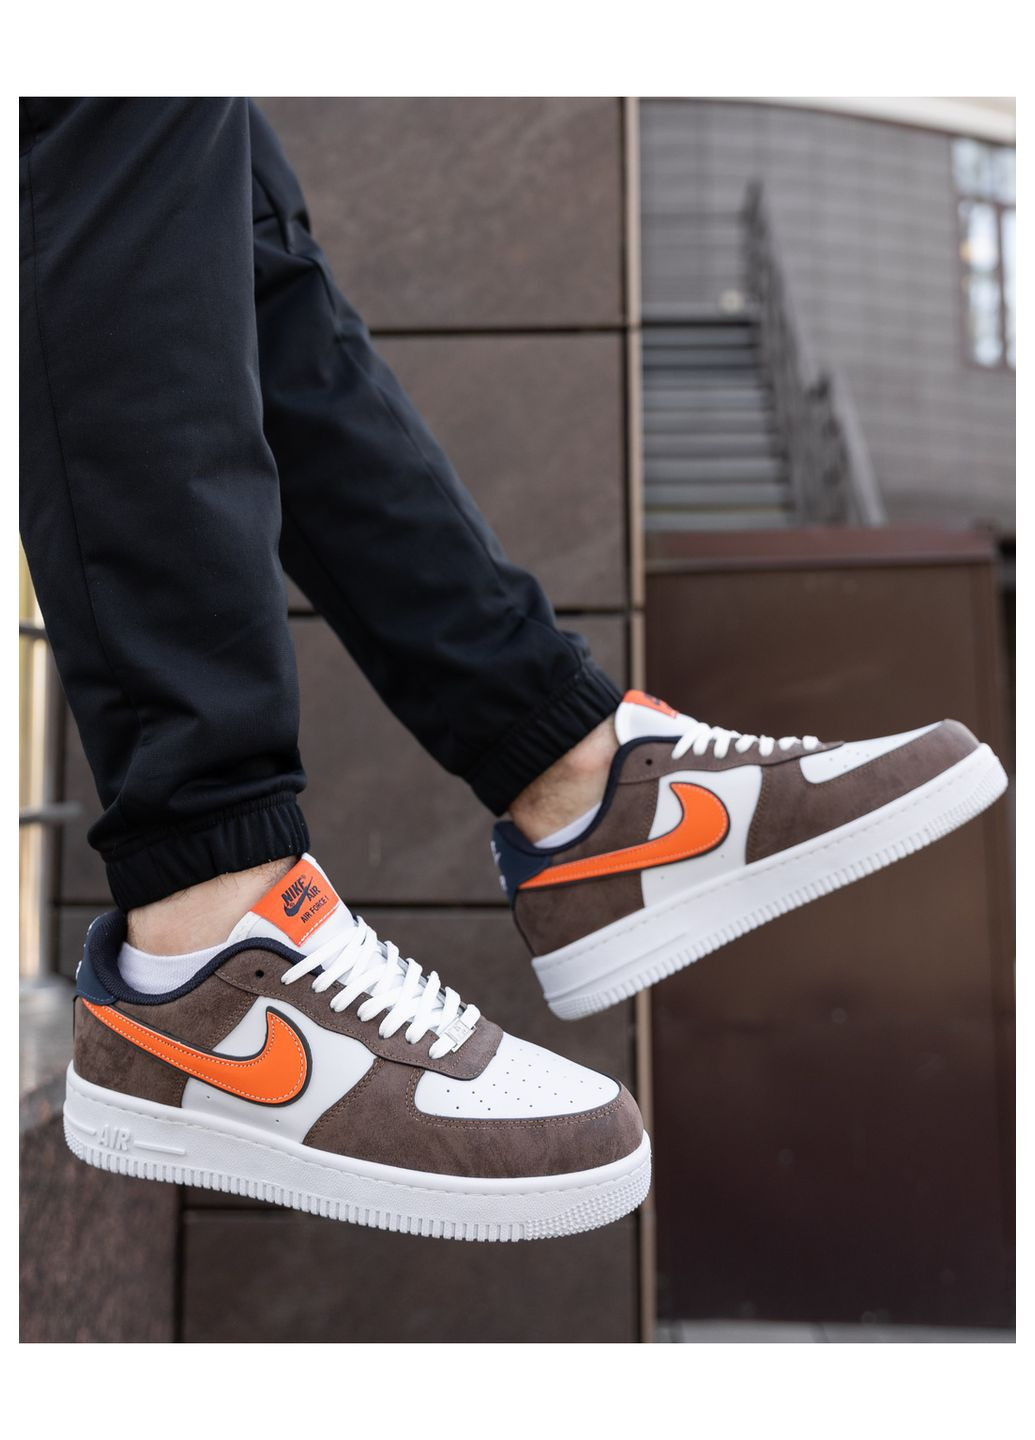 Цветные демисезонные кроссовки мужские brown white orange, вьетнам Nike Air Force